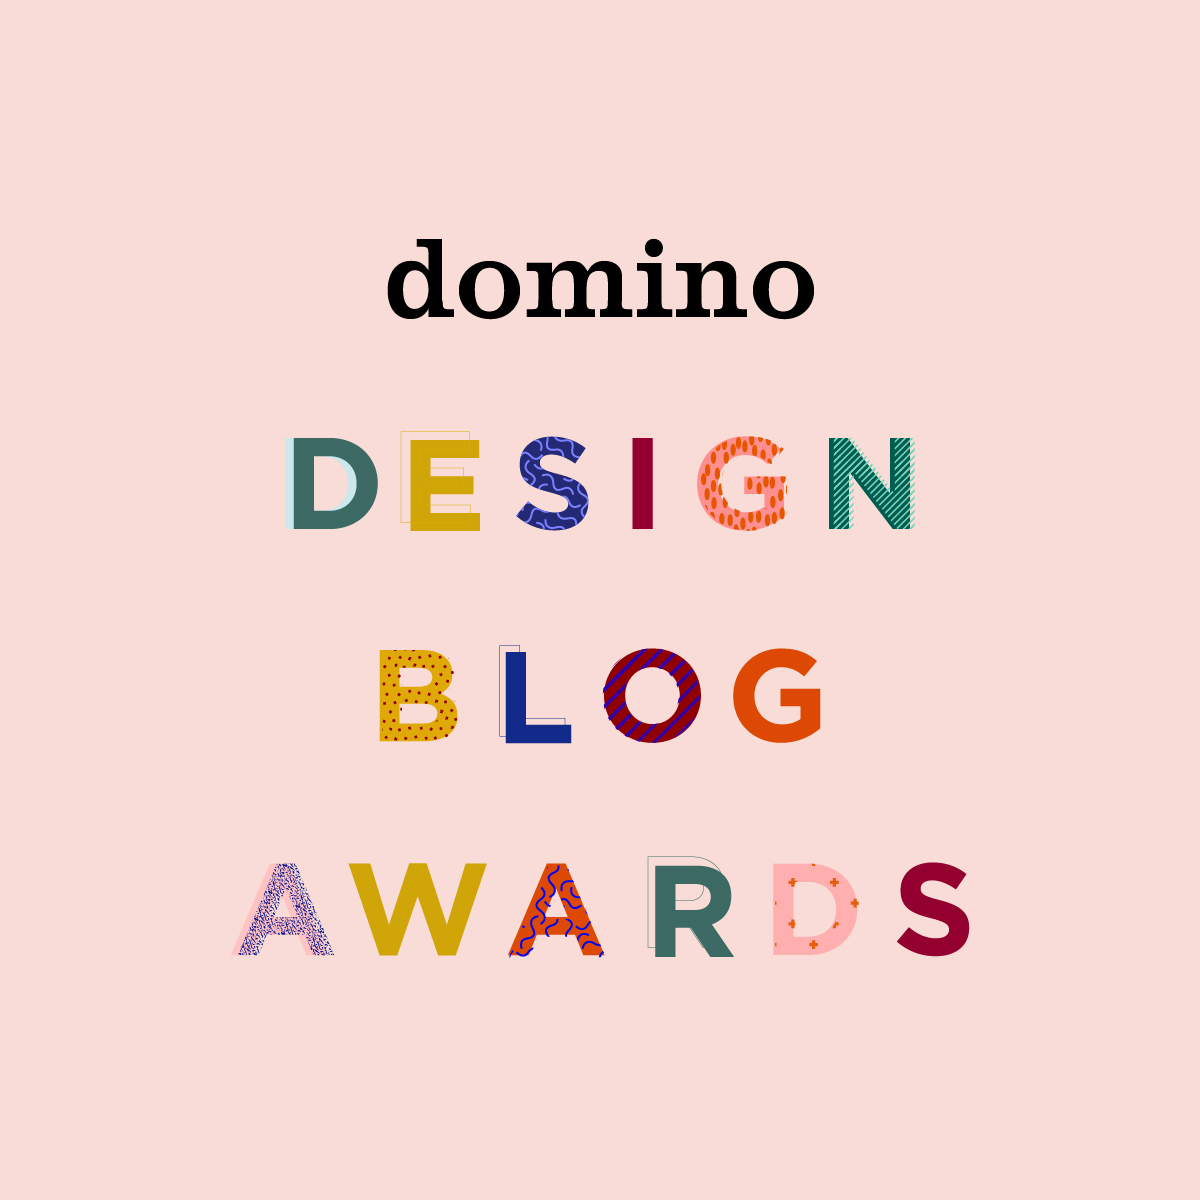 domino Design Blog Awards